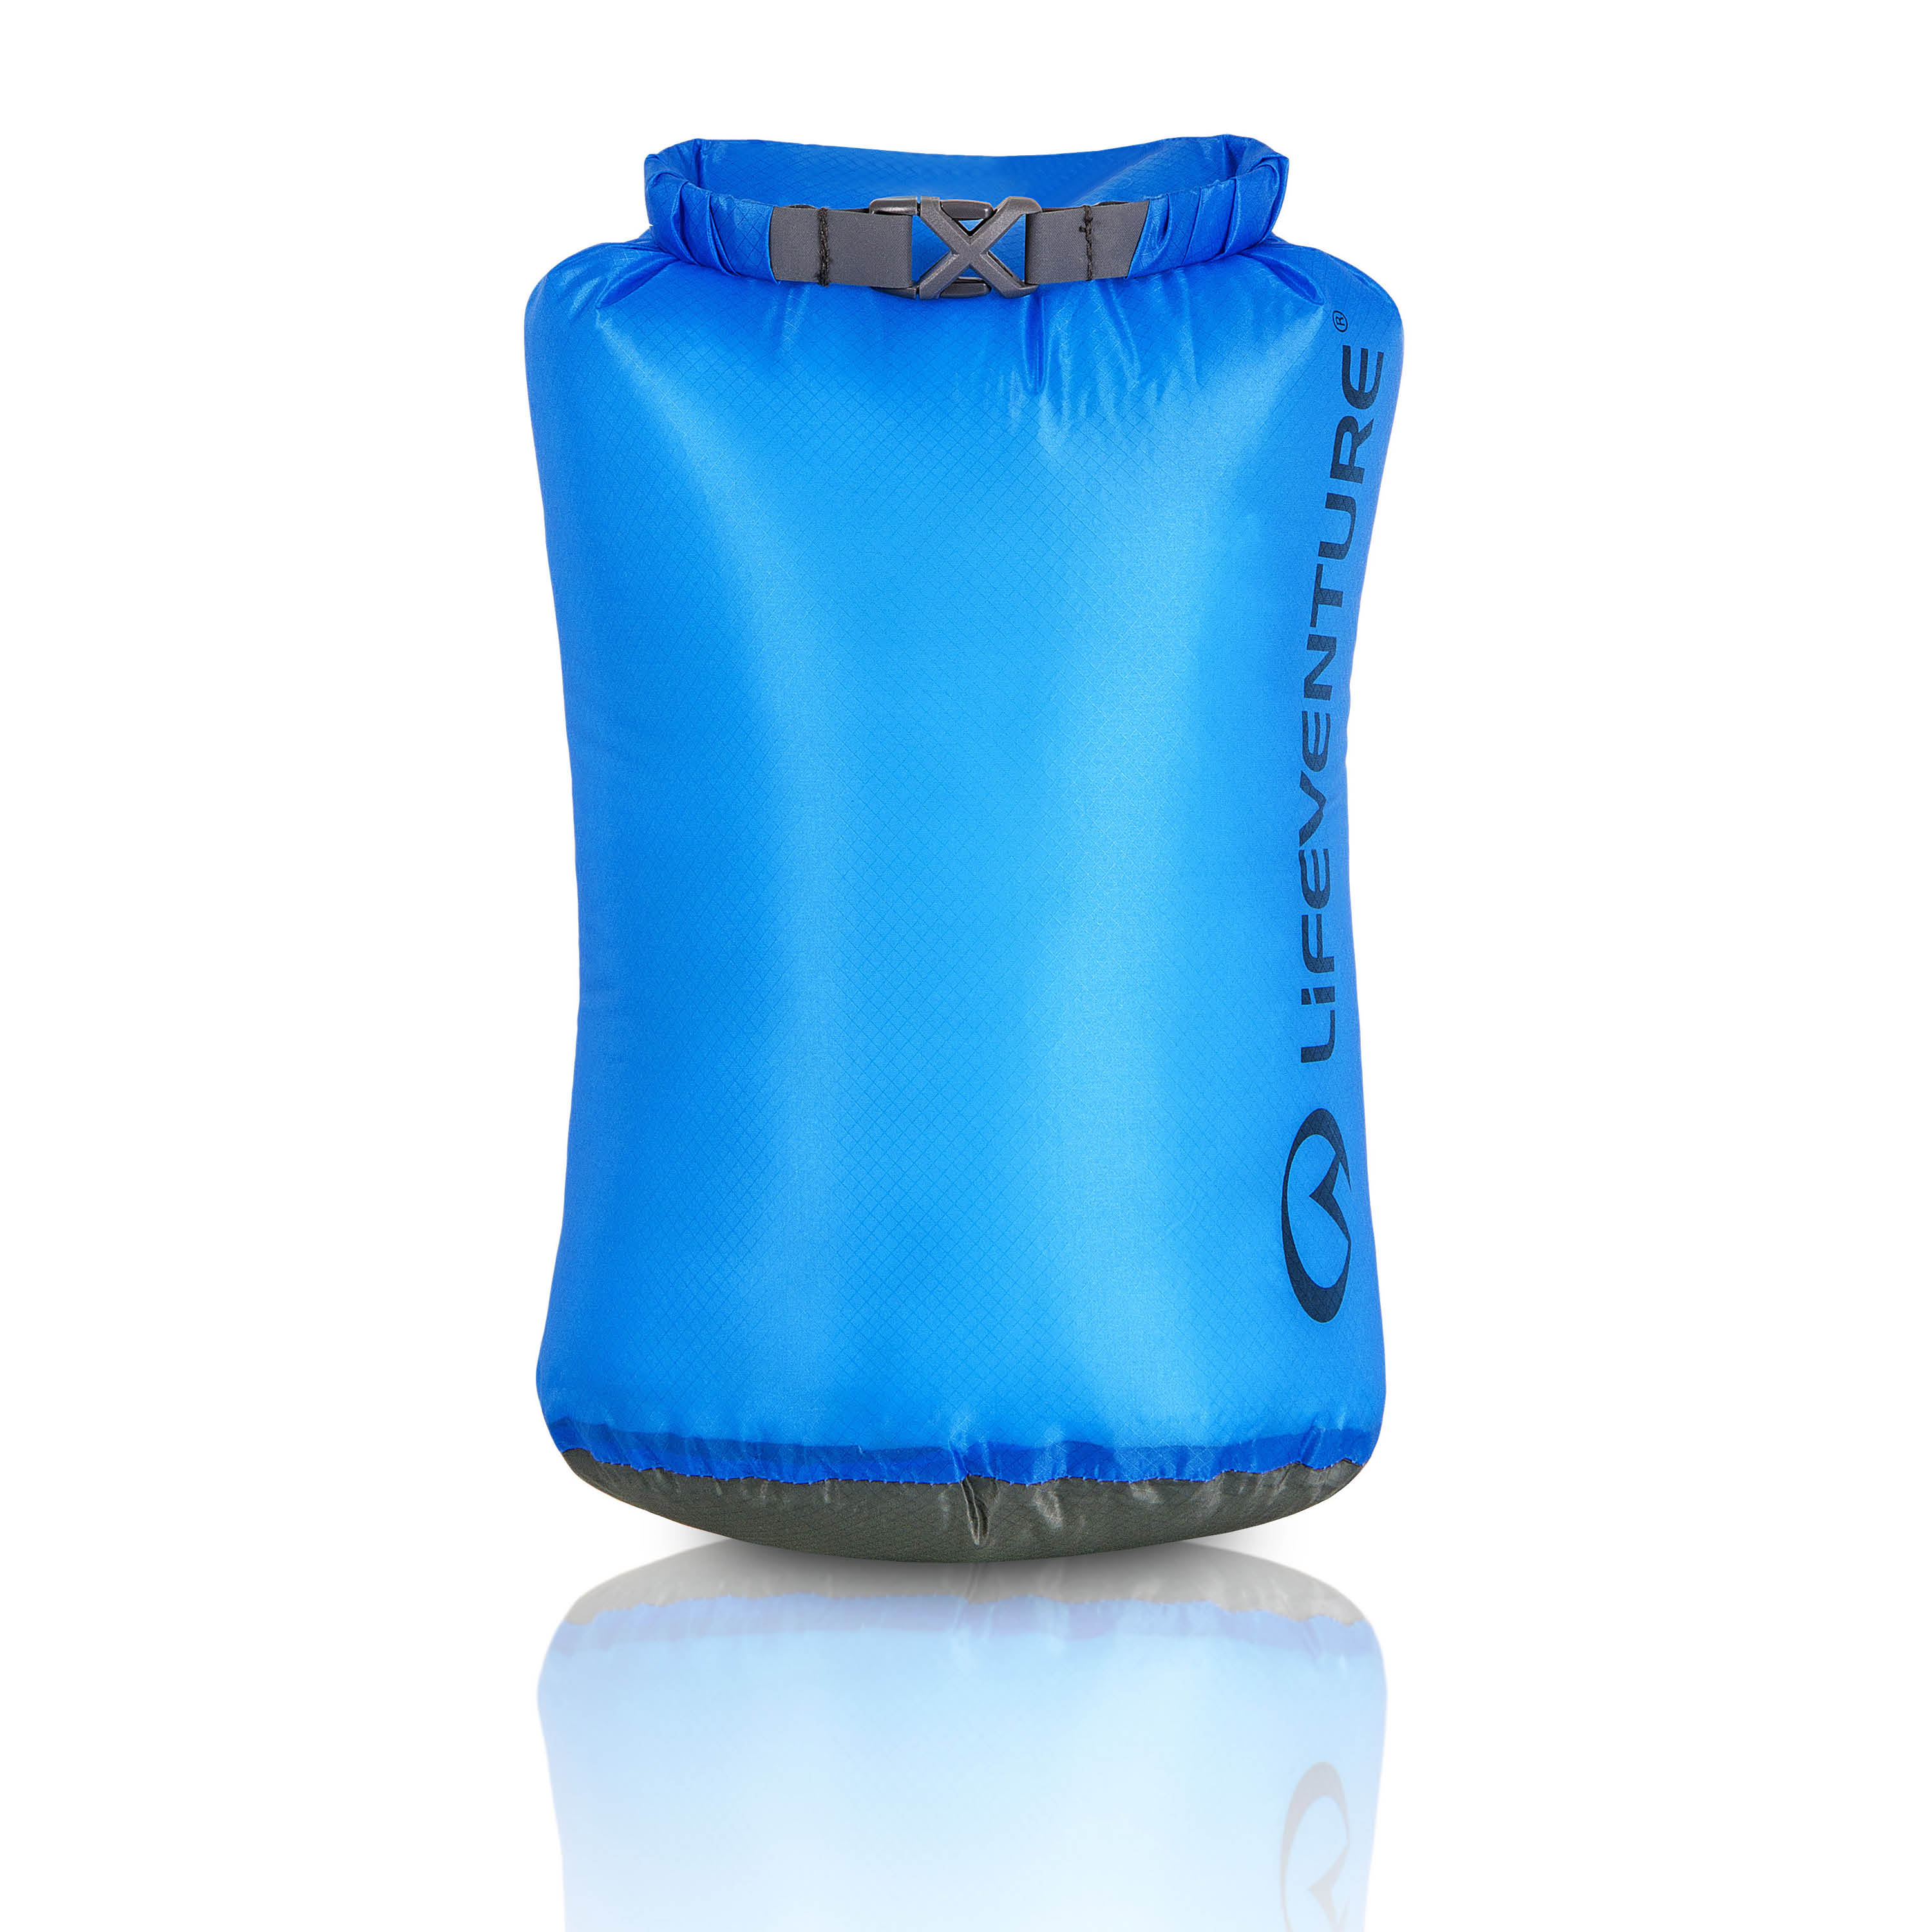 Lifeventure(r) Ultralight Dry Bag 5L